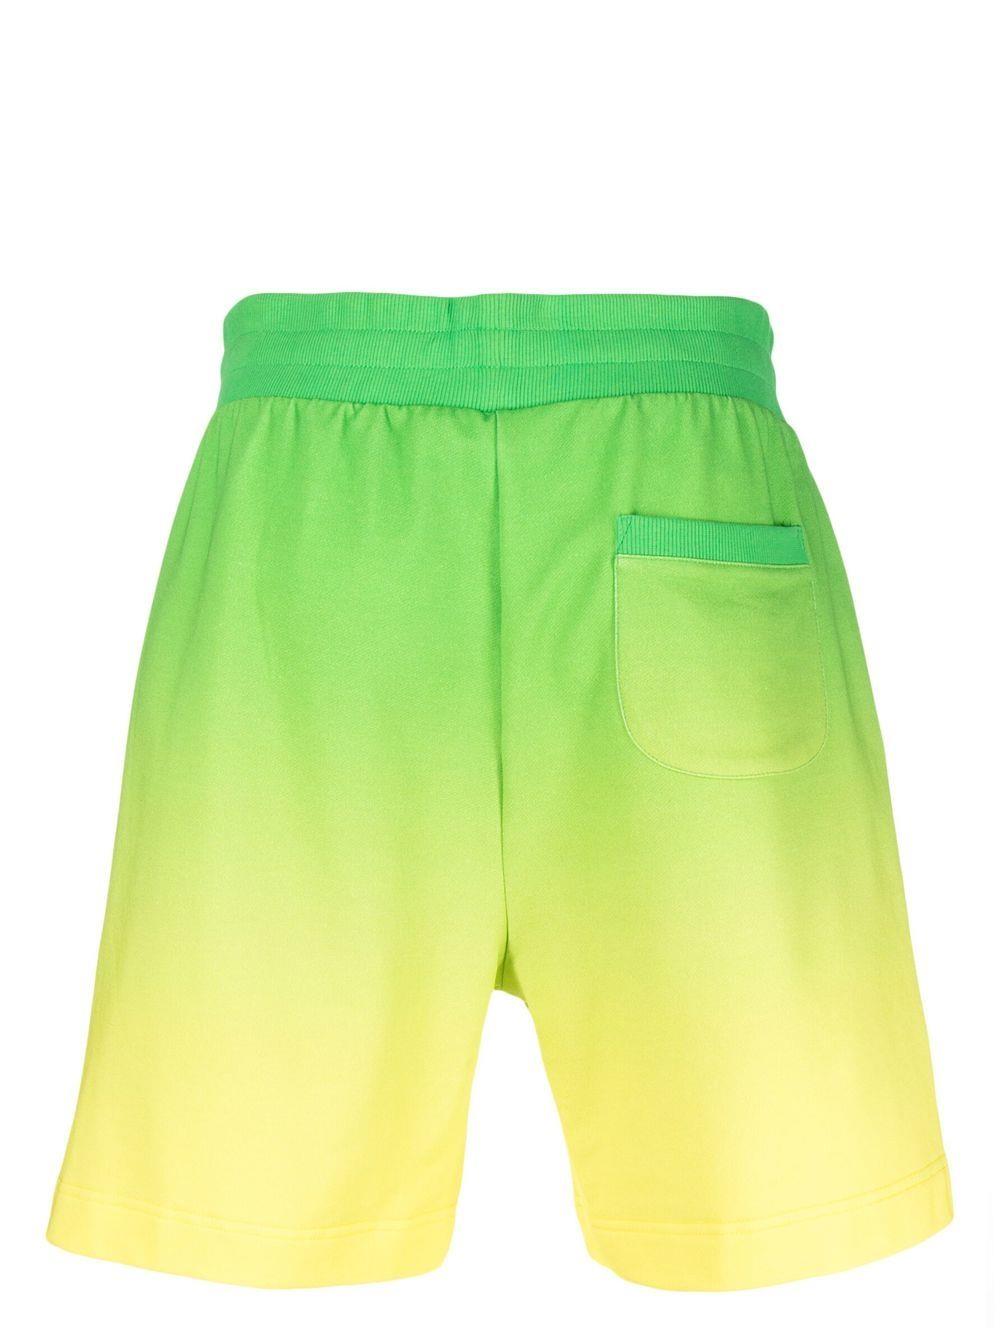 Moschino ombré effect raised-logo shorts - Green